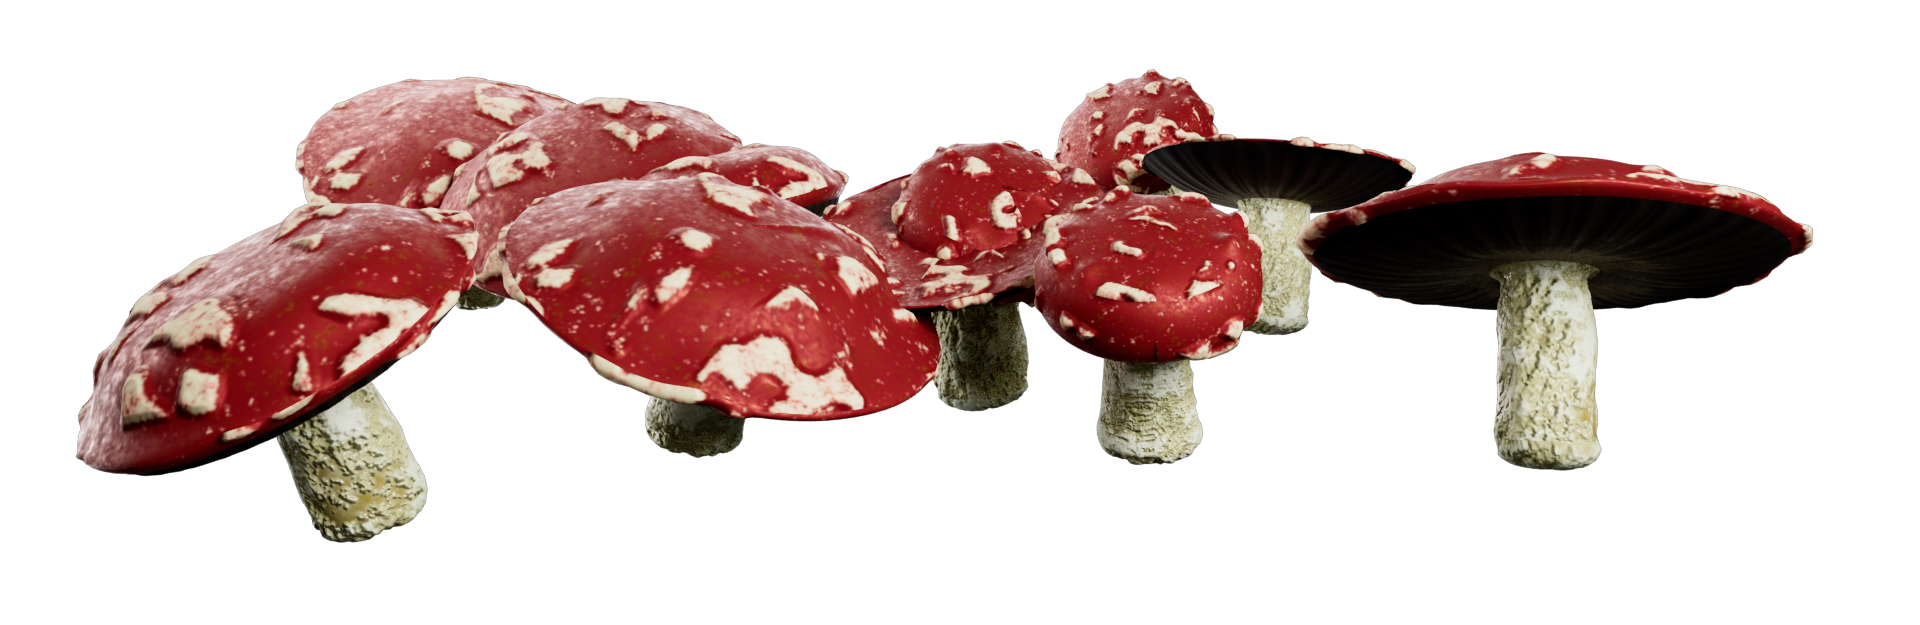 m/mushrooms image 3